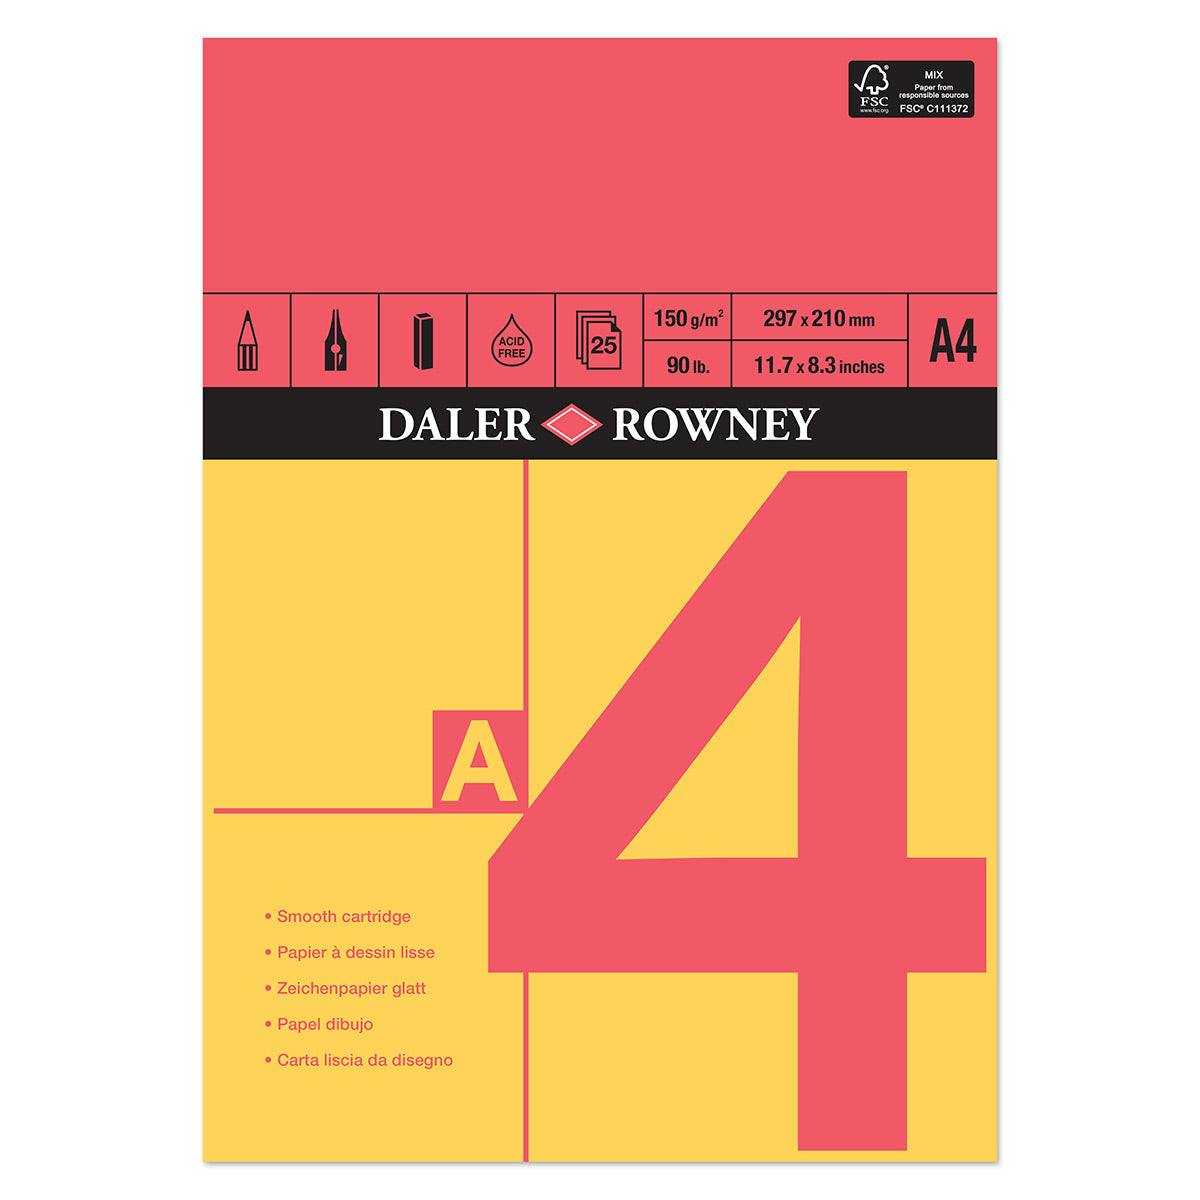 Daler Rowney - Rot & Gelb gummierter Patronen-Skizzenblock - A4 - 150 g/m²